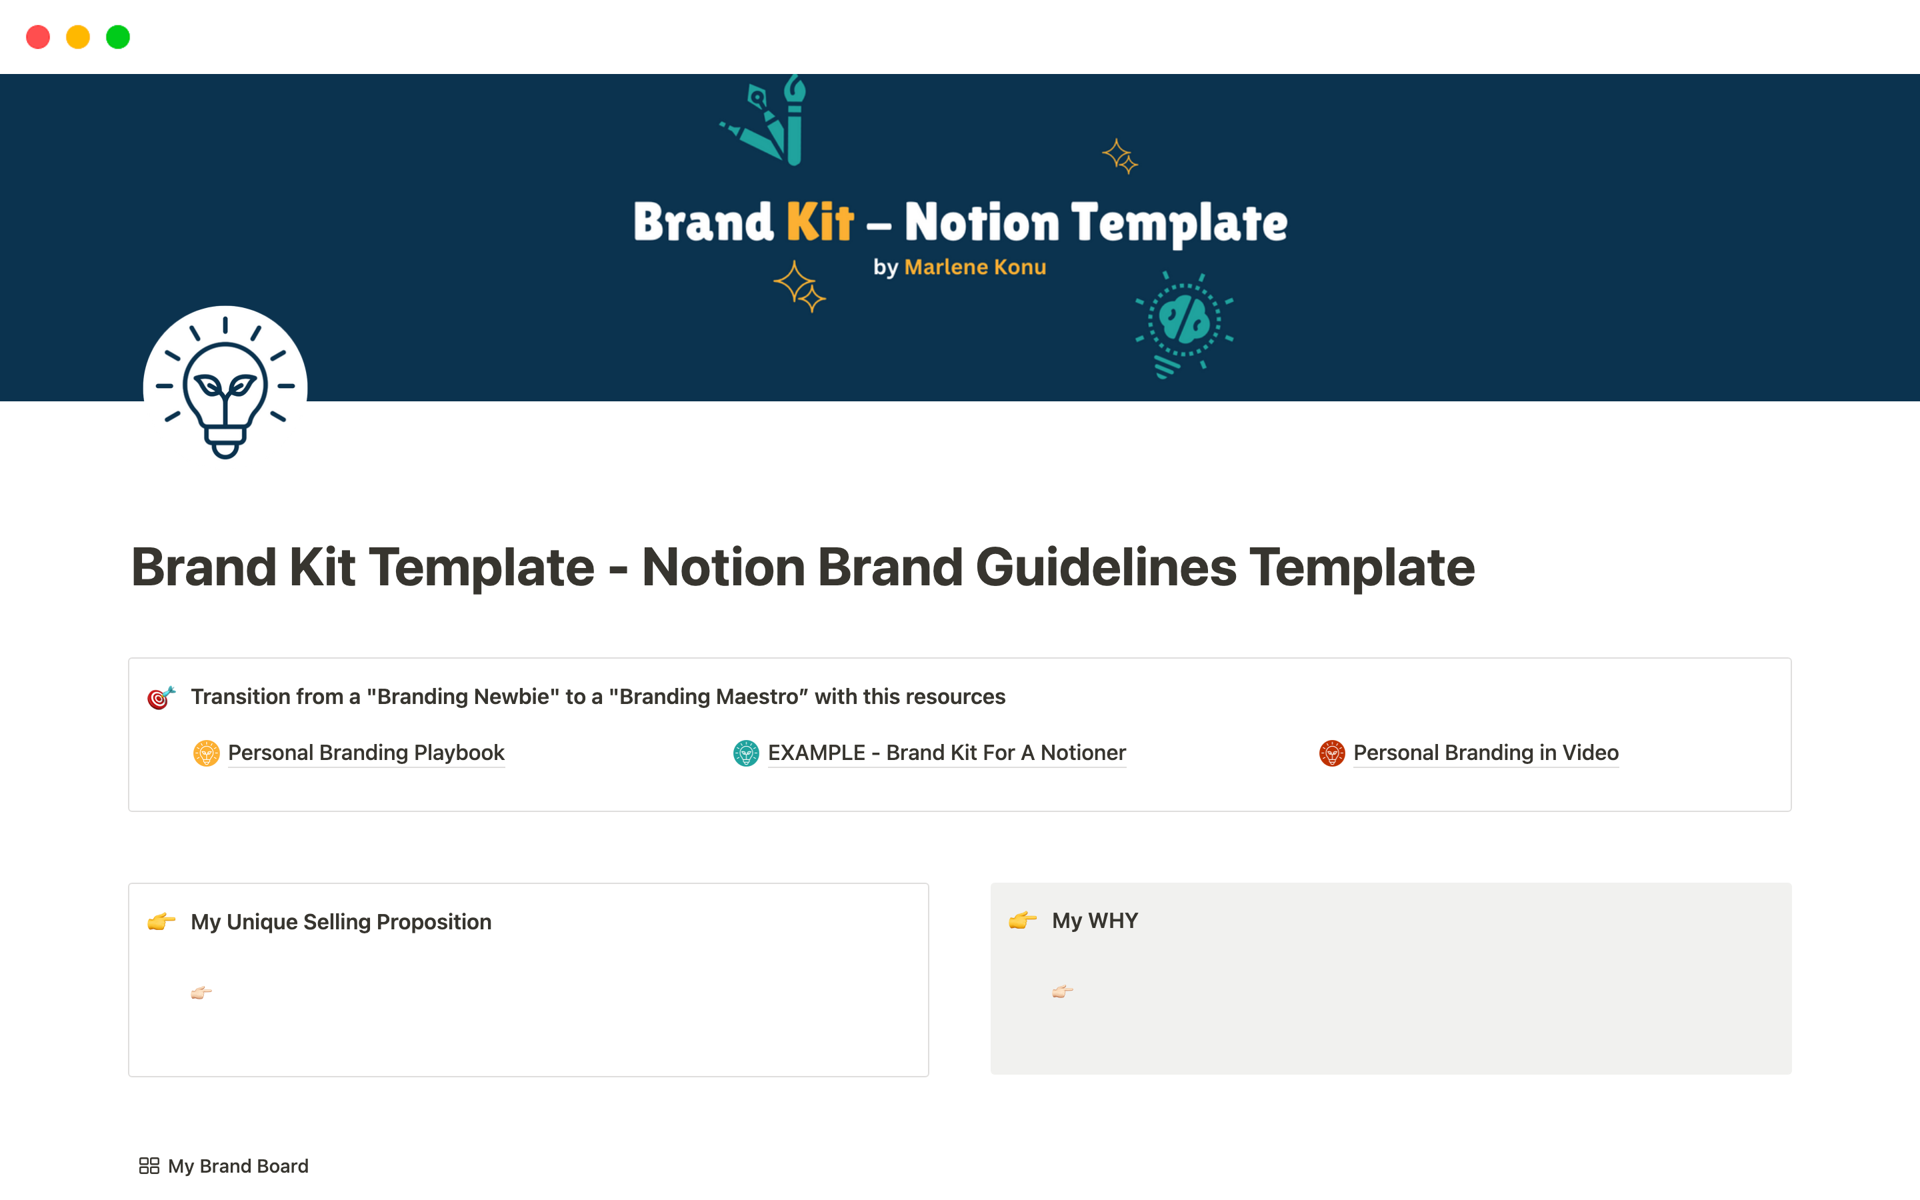 Vista previa de una plantilla para Brand Kit Template - Notion Brand Guidelines Template